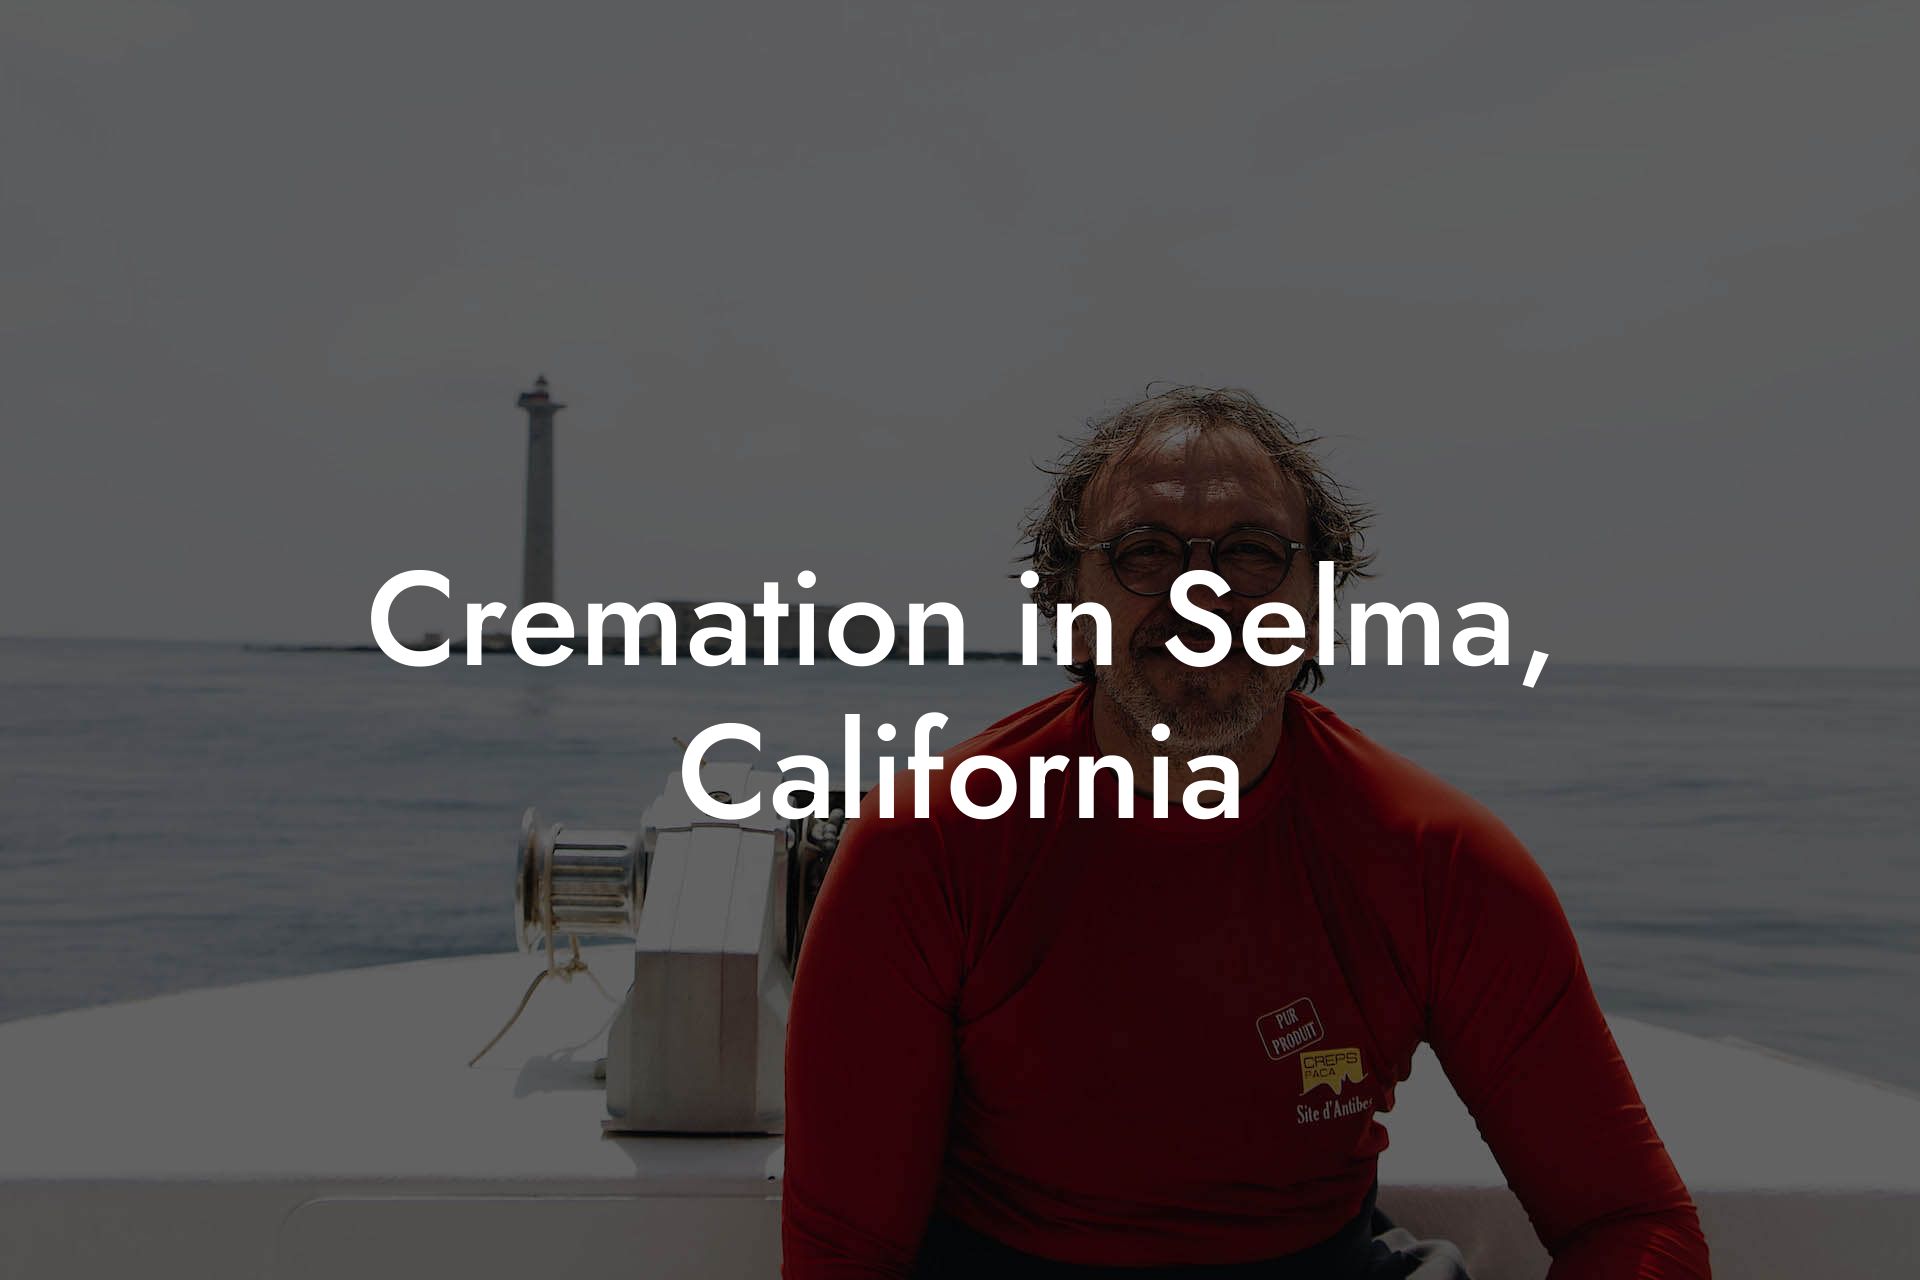 Cremation in Selma, California